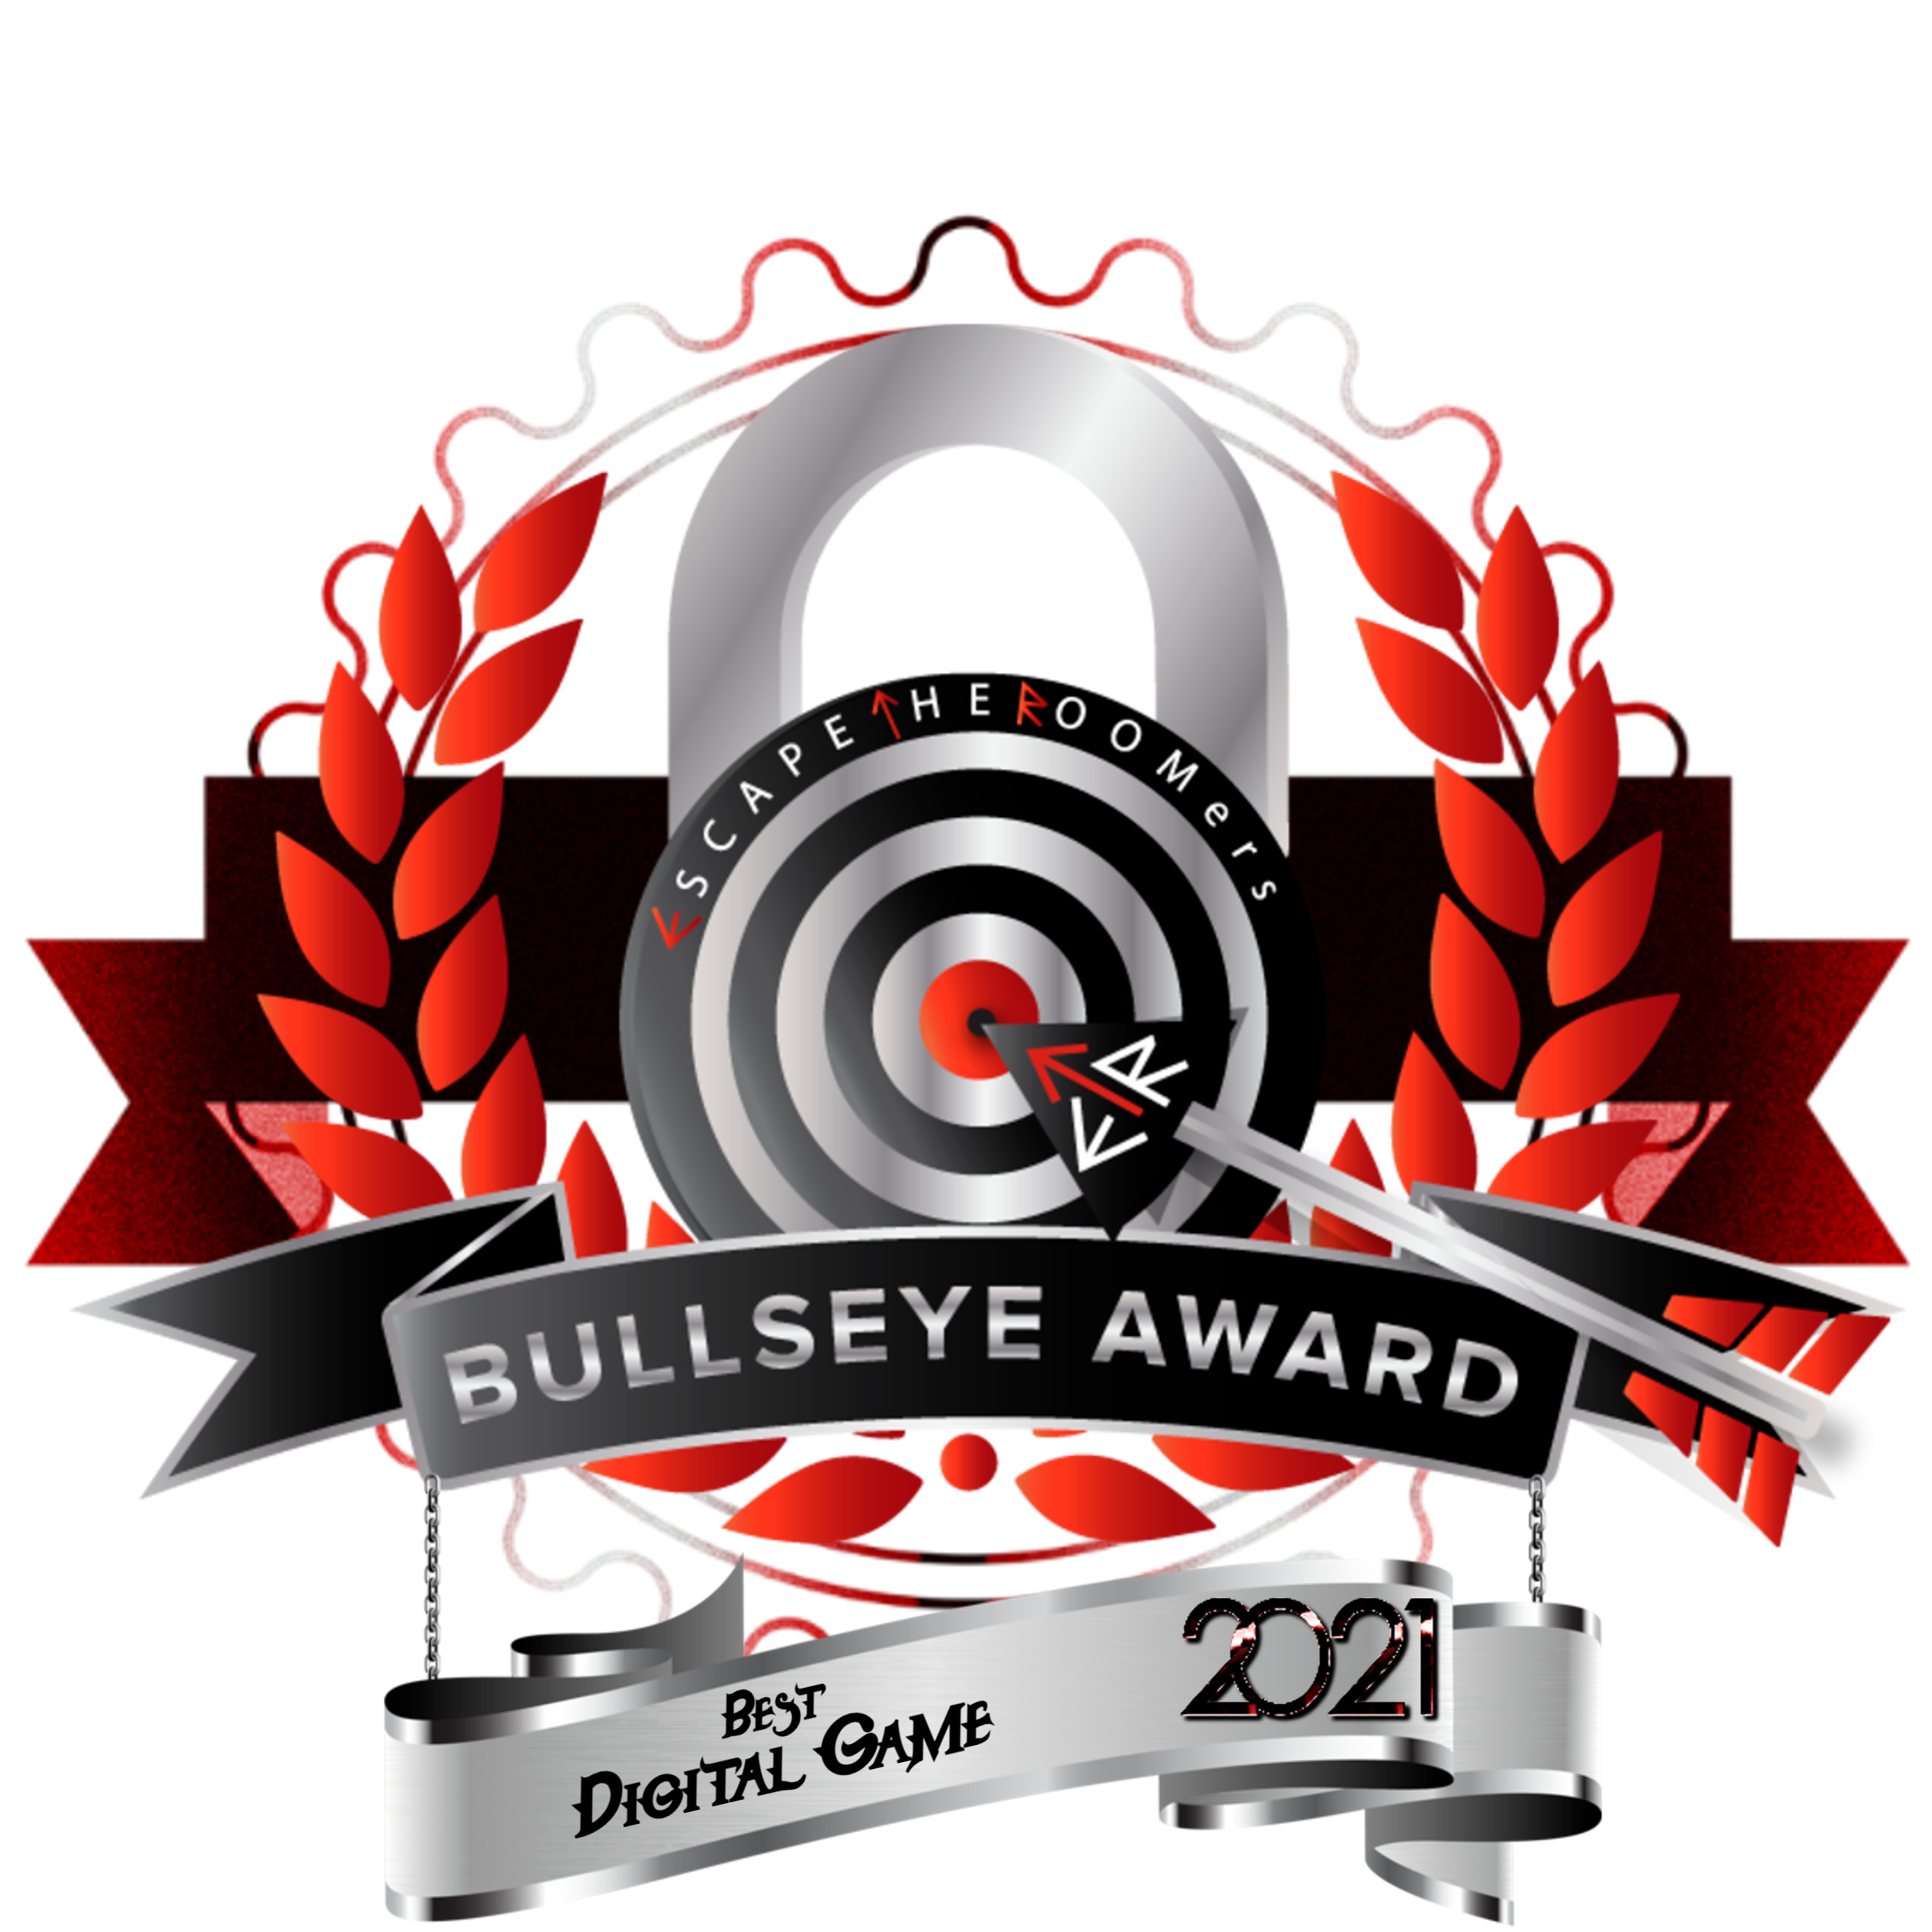 Bullseye! We won the Best Digital Game 2021 award